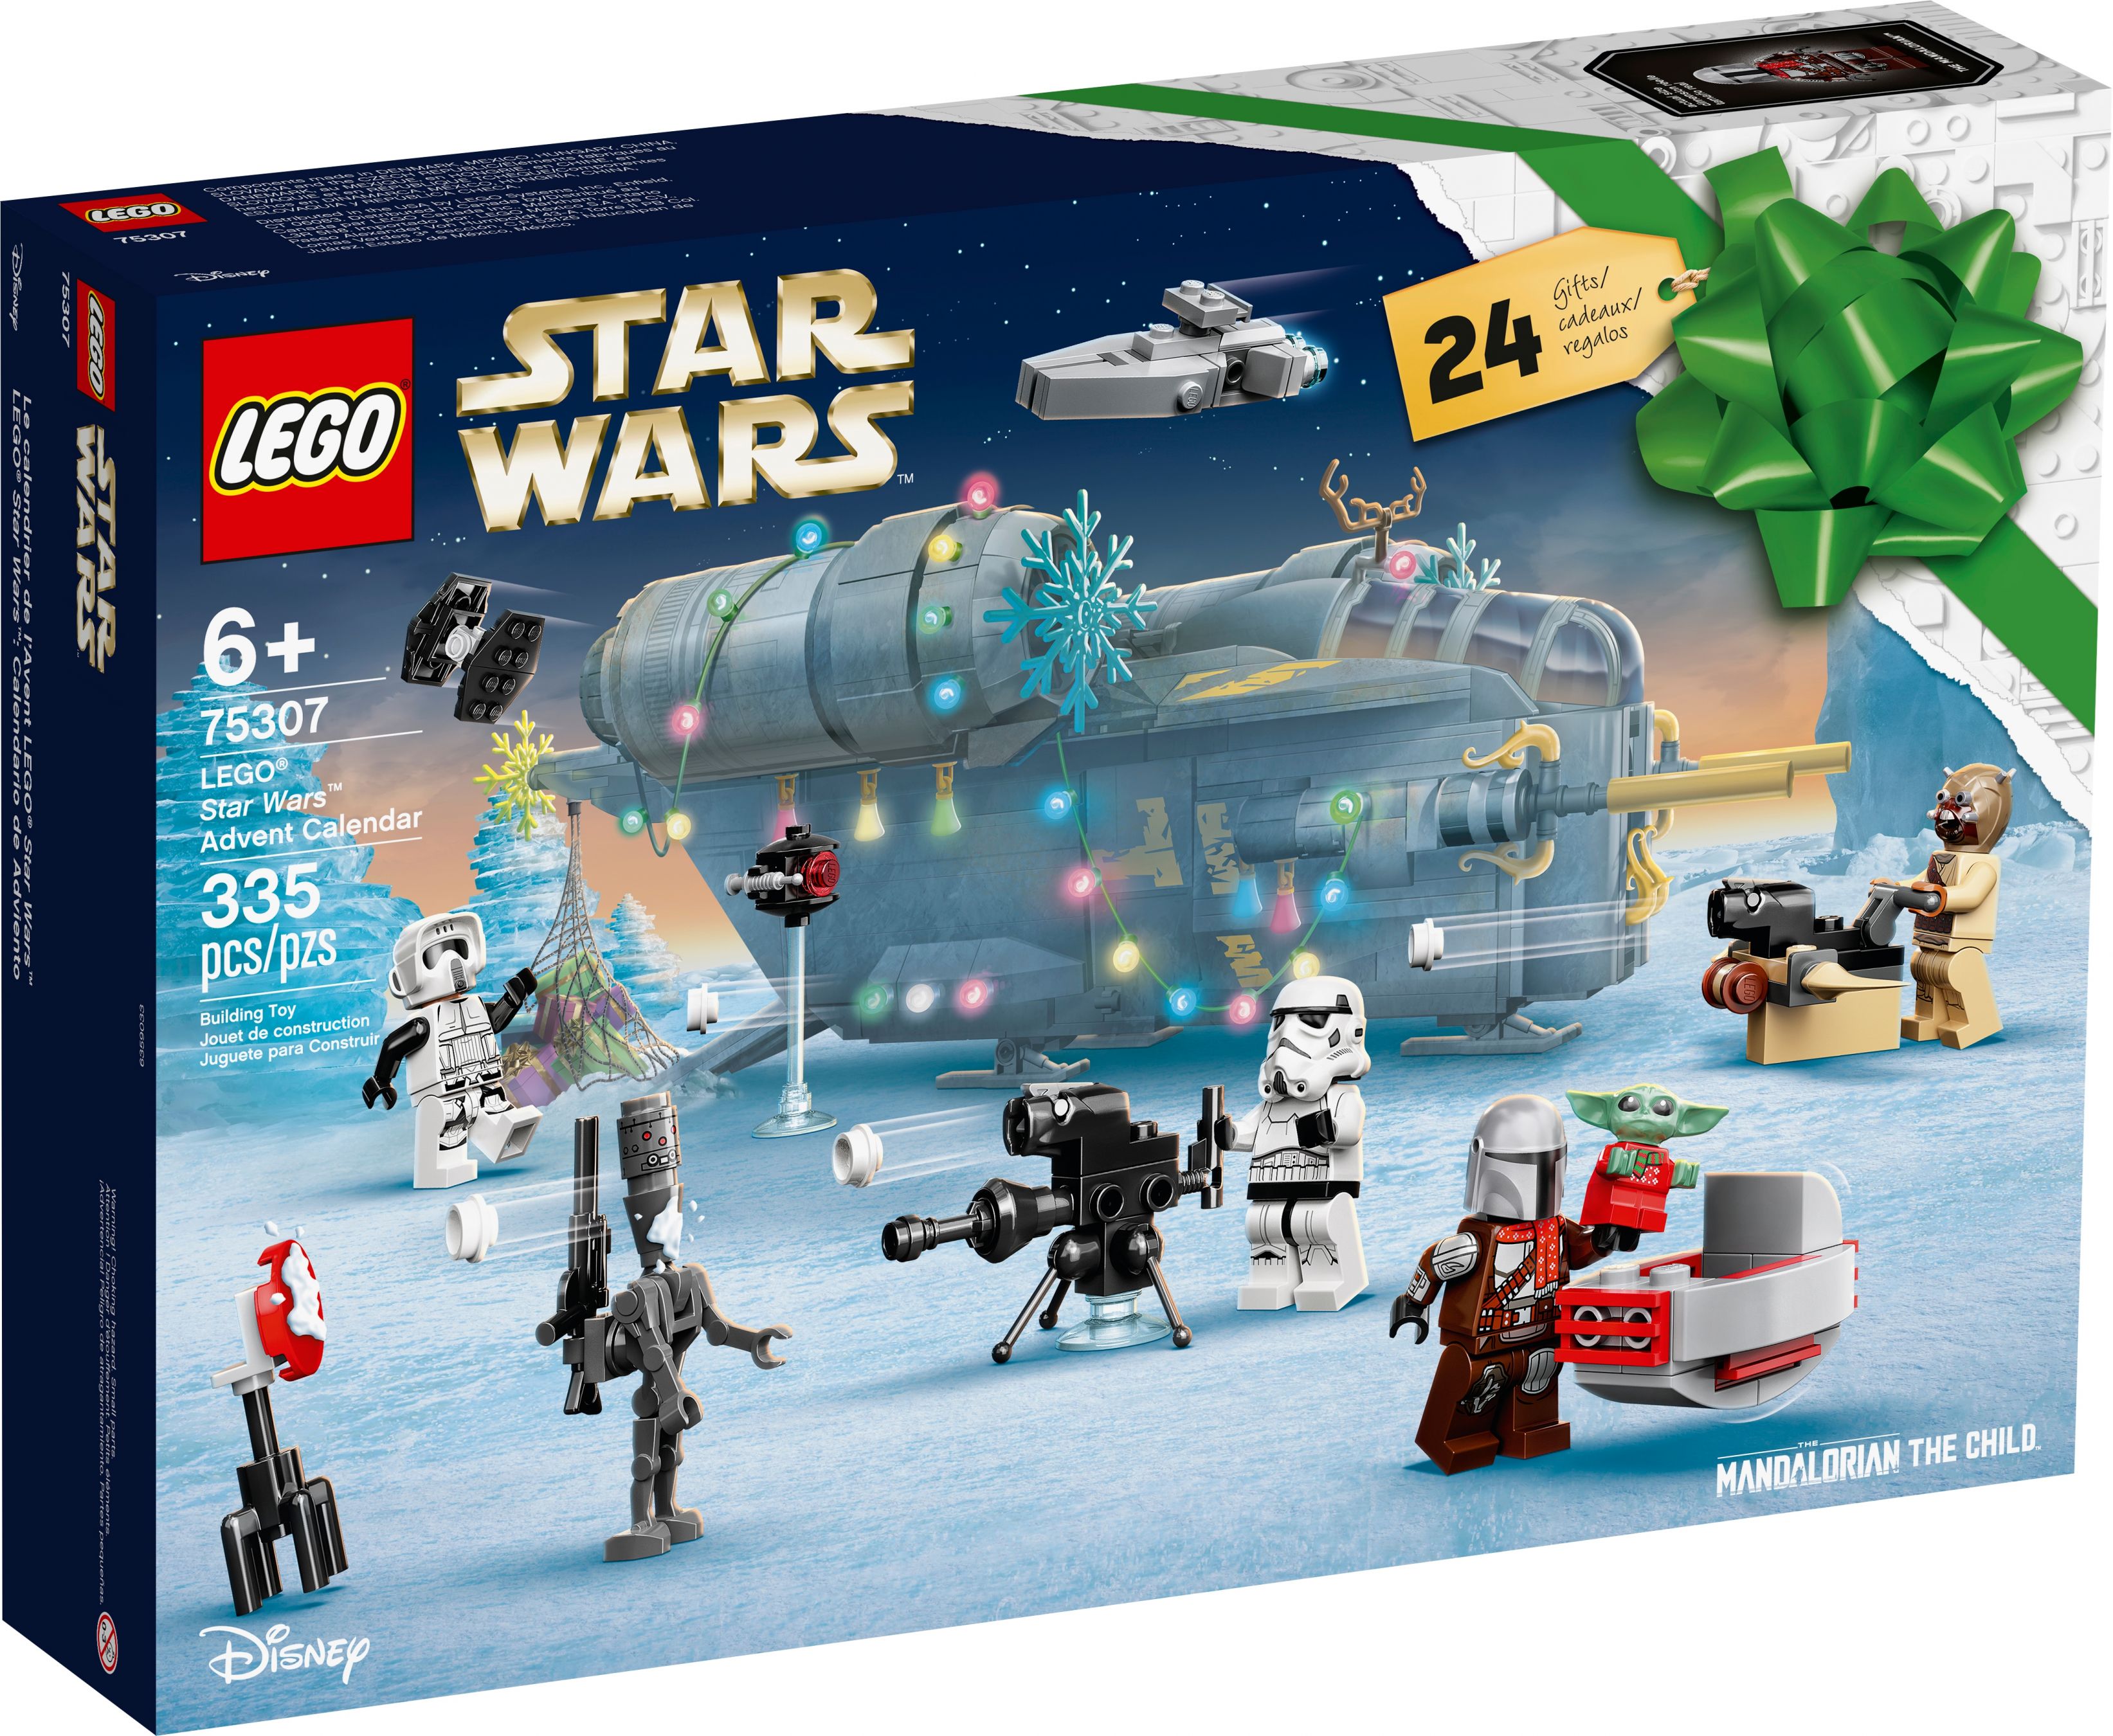 Lego Star Wars Adventskalender 2021 75307 2021 Lego Preisvergleich Brickmerge De